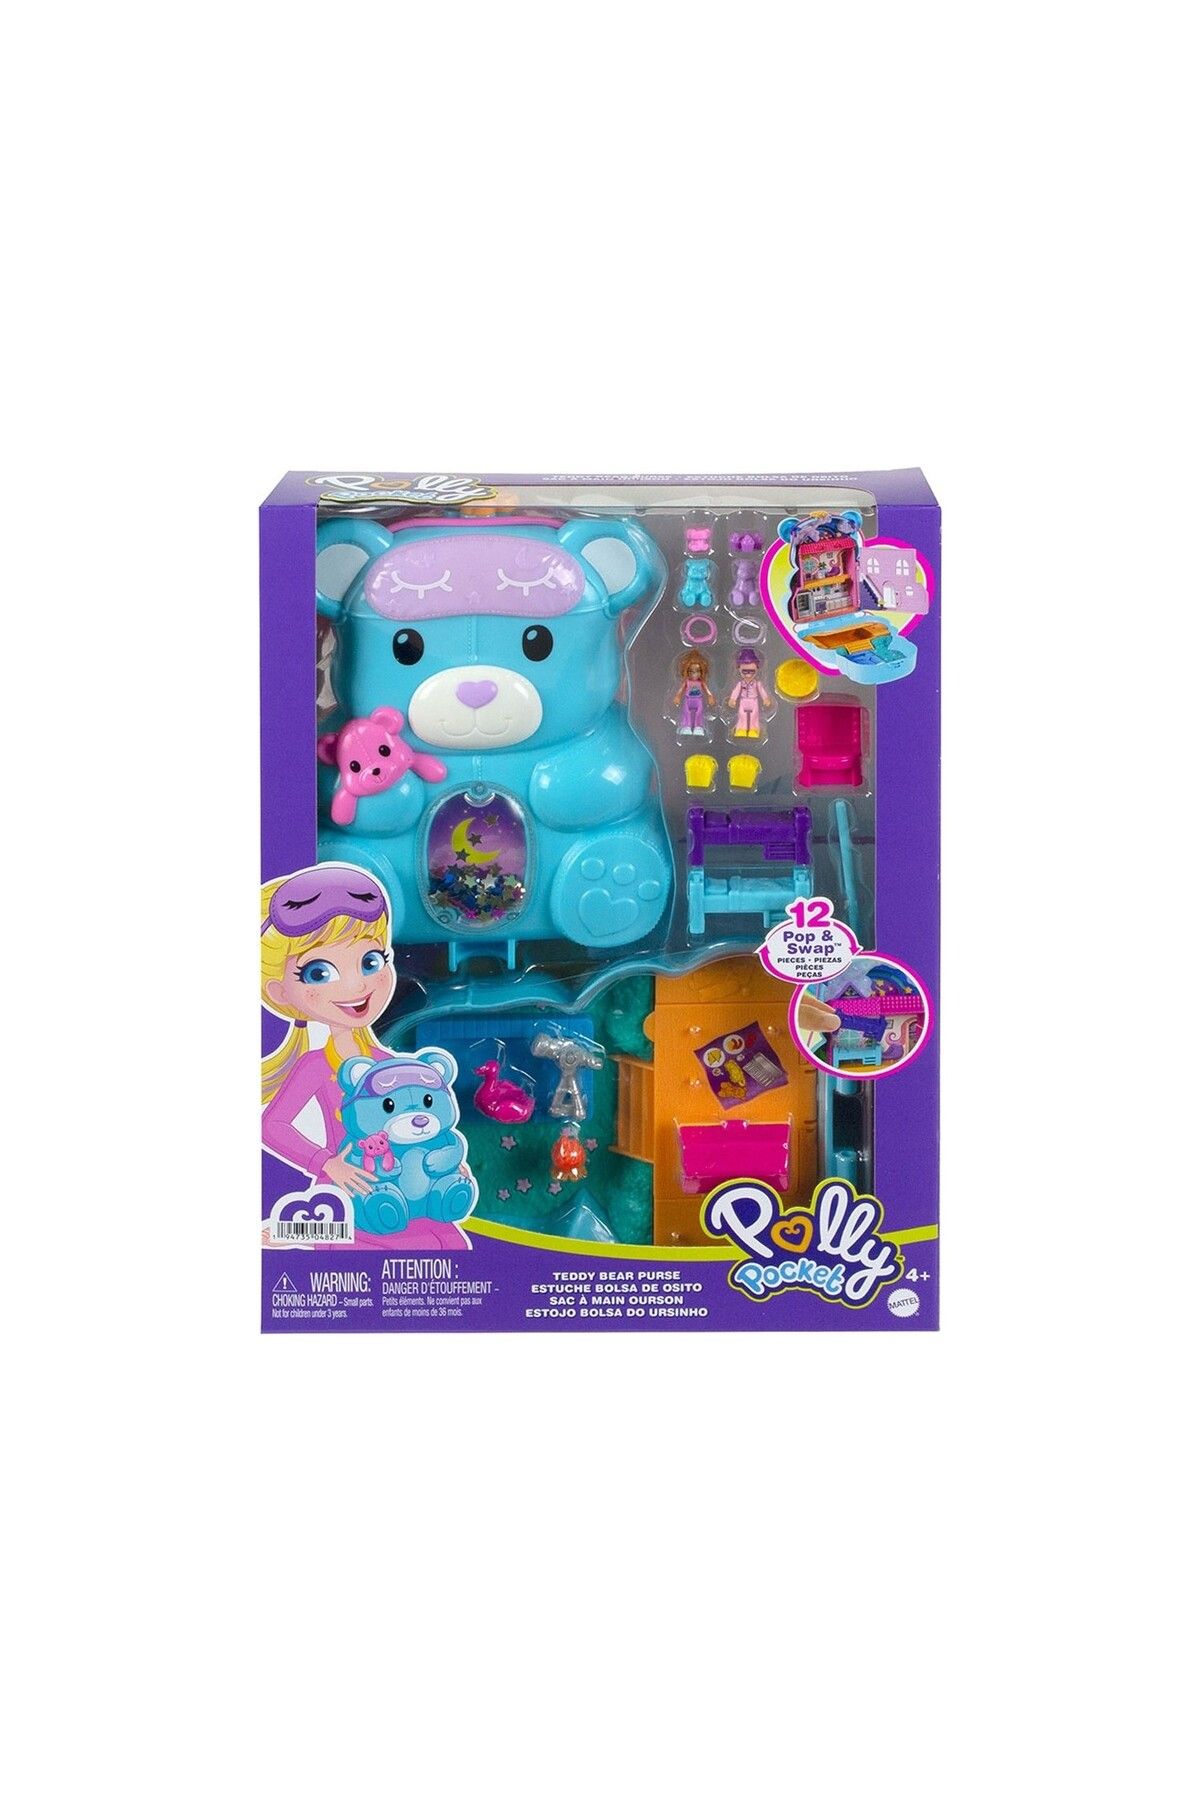 sommeow Polly Pocket Çanta Olabilen Micro Oyun Setleri Gkj63 Teddy Bear Purse